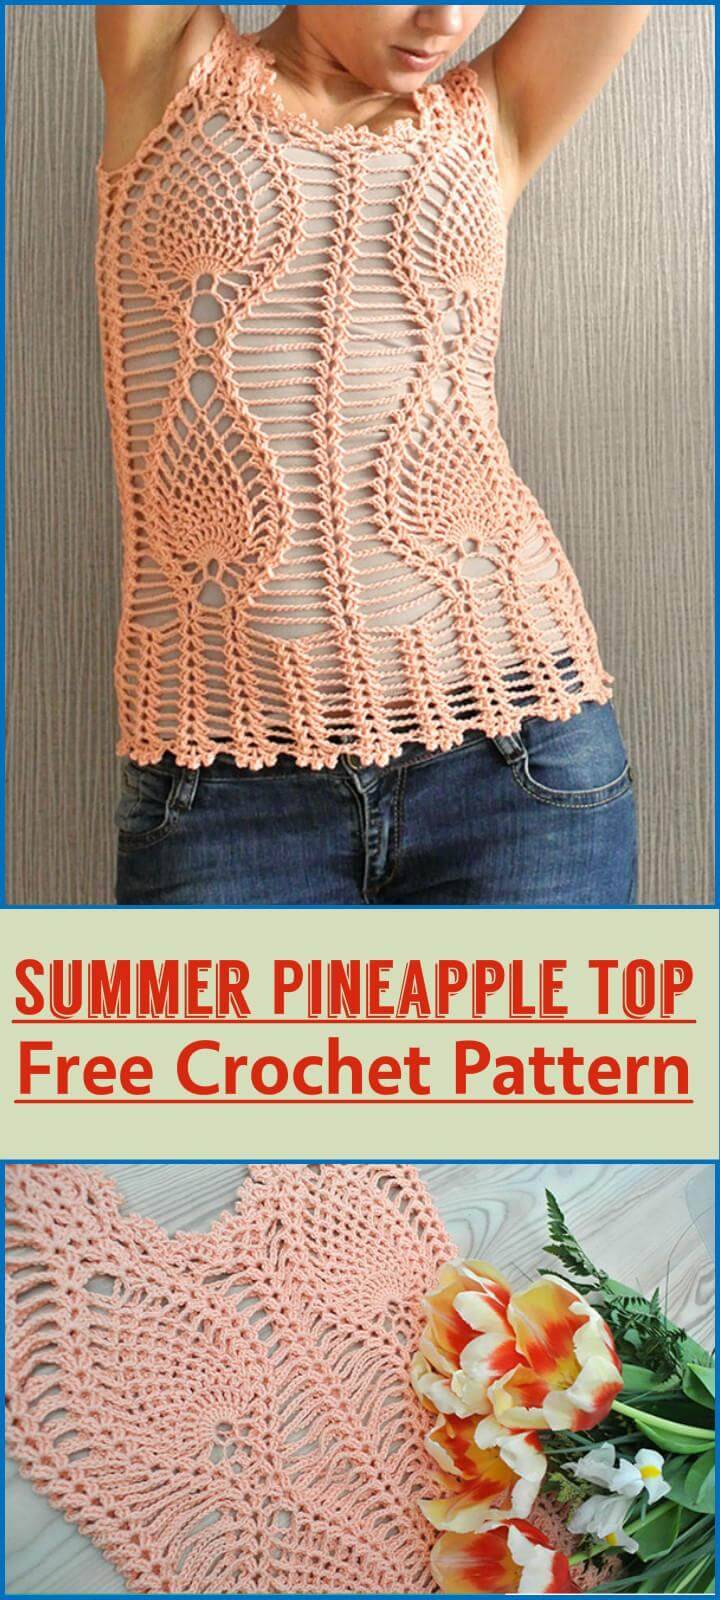 Summer Pineapple Top Free Crochet Pattern